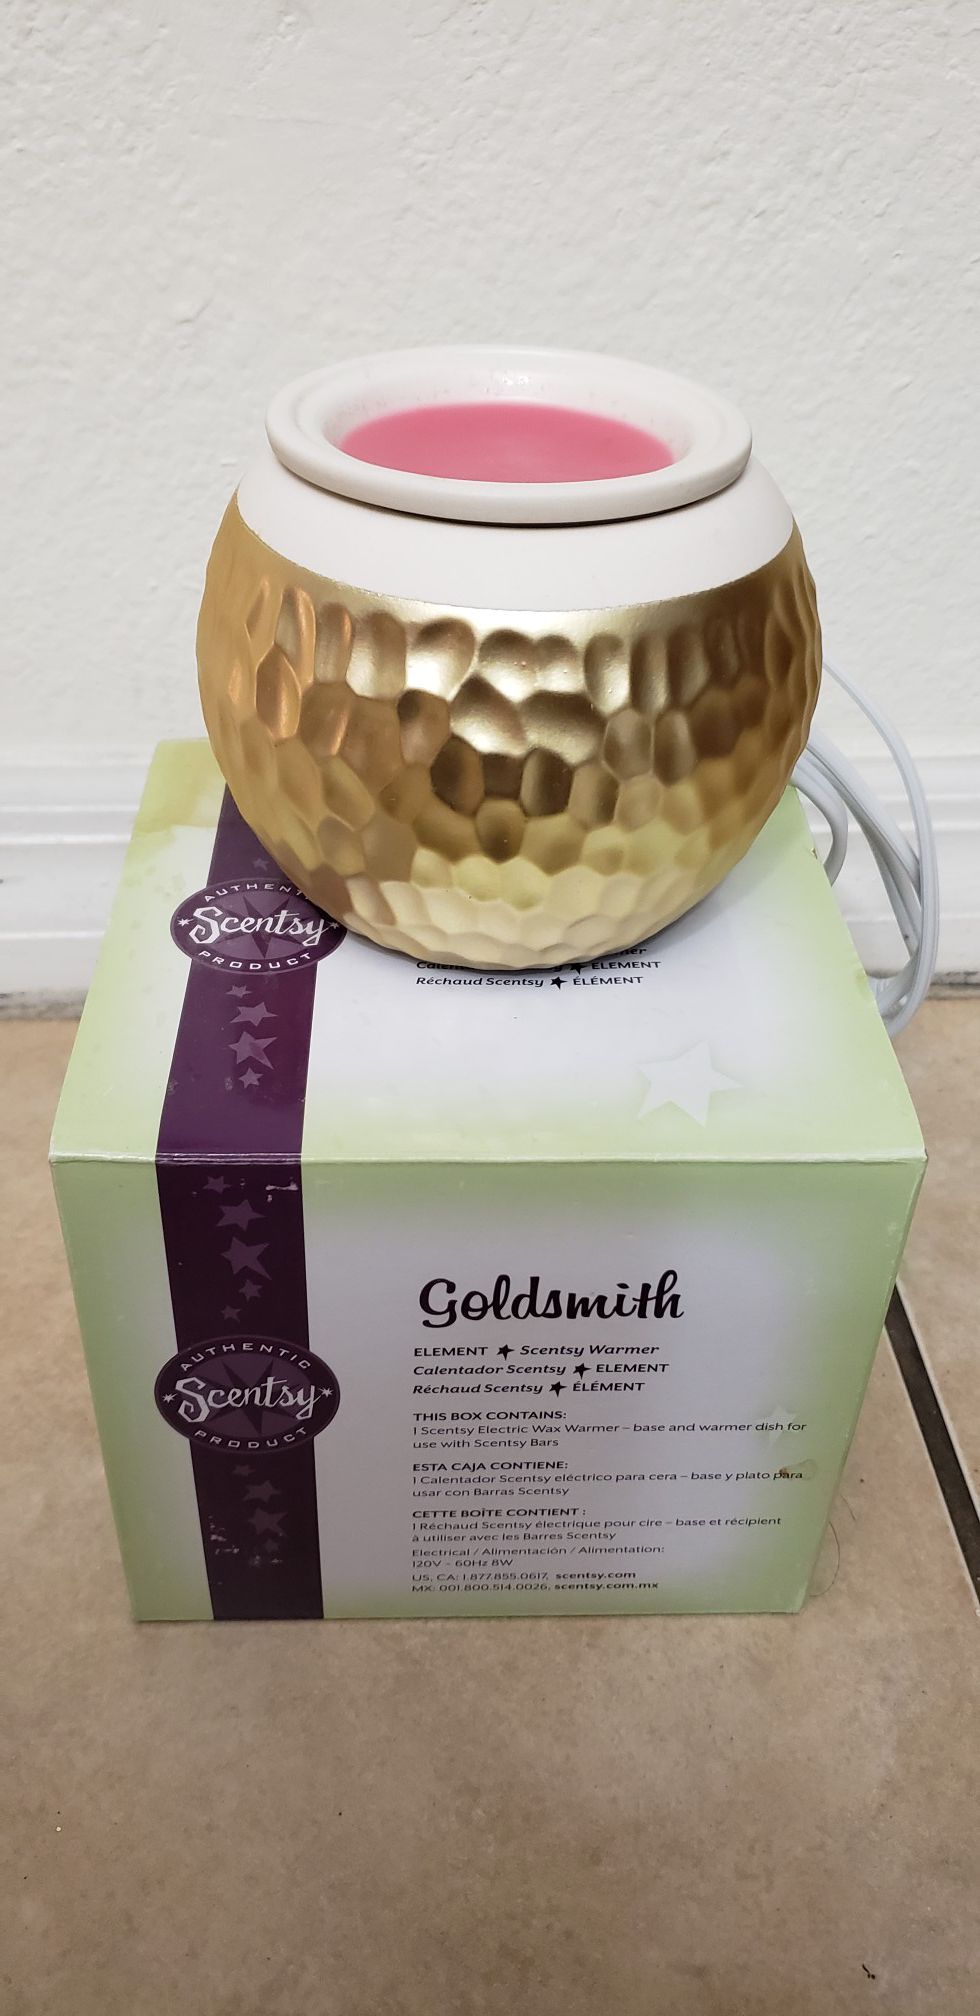 Scentsy Goldsmith wax warmer